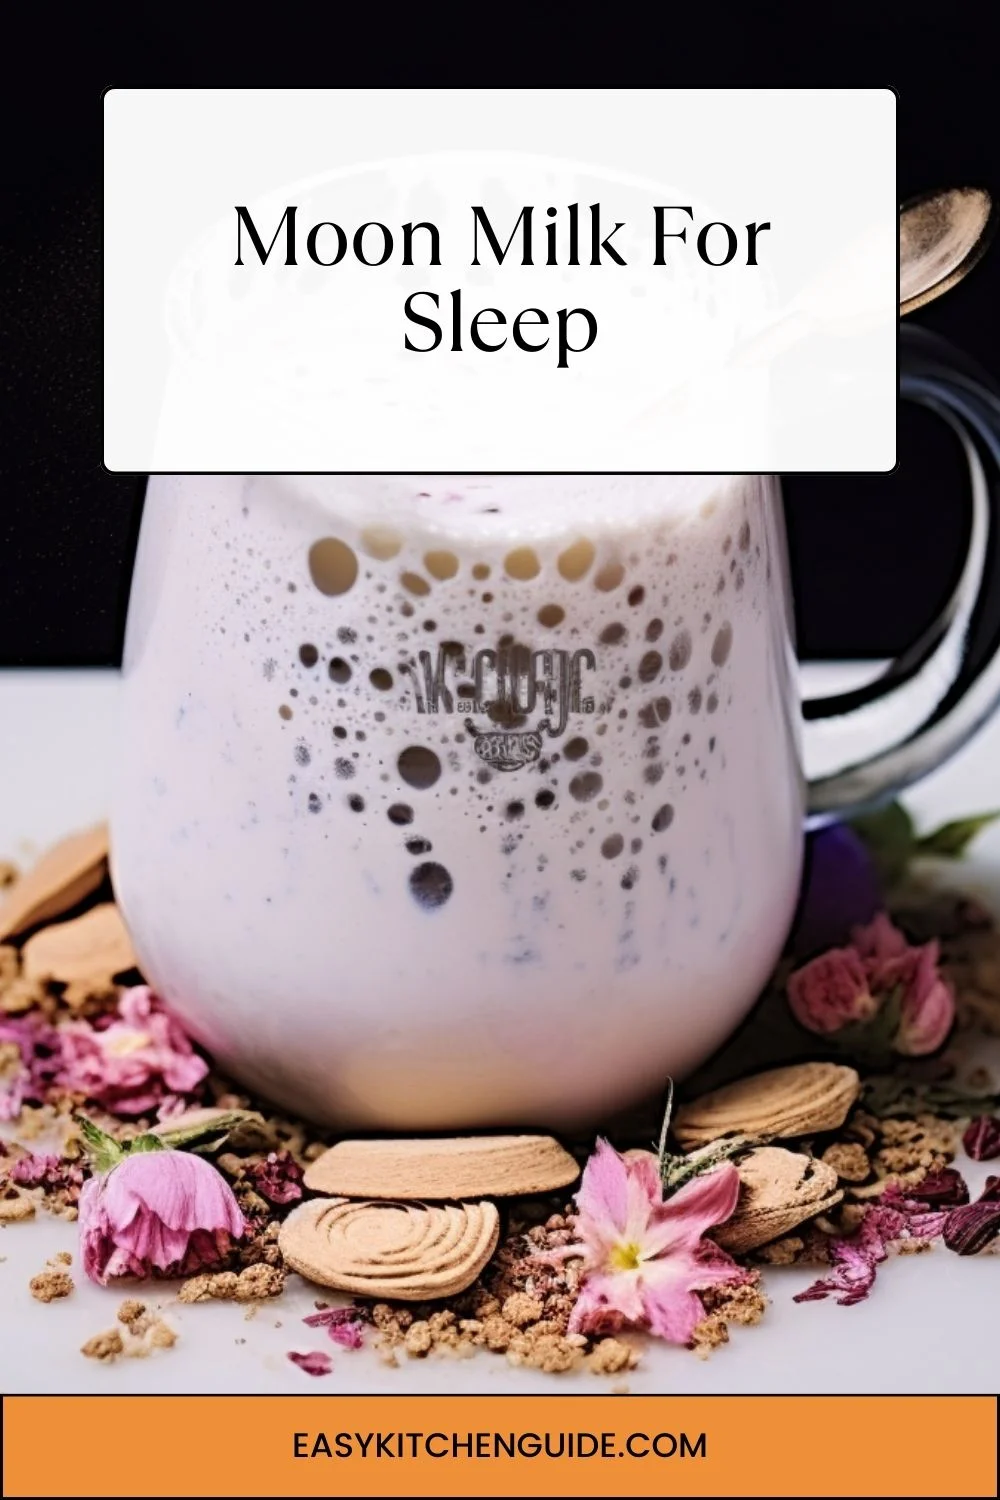 Moon Milk For Sleep